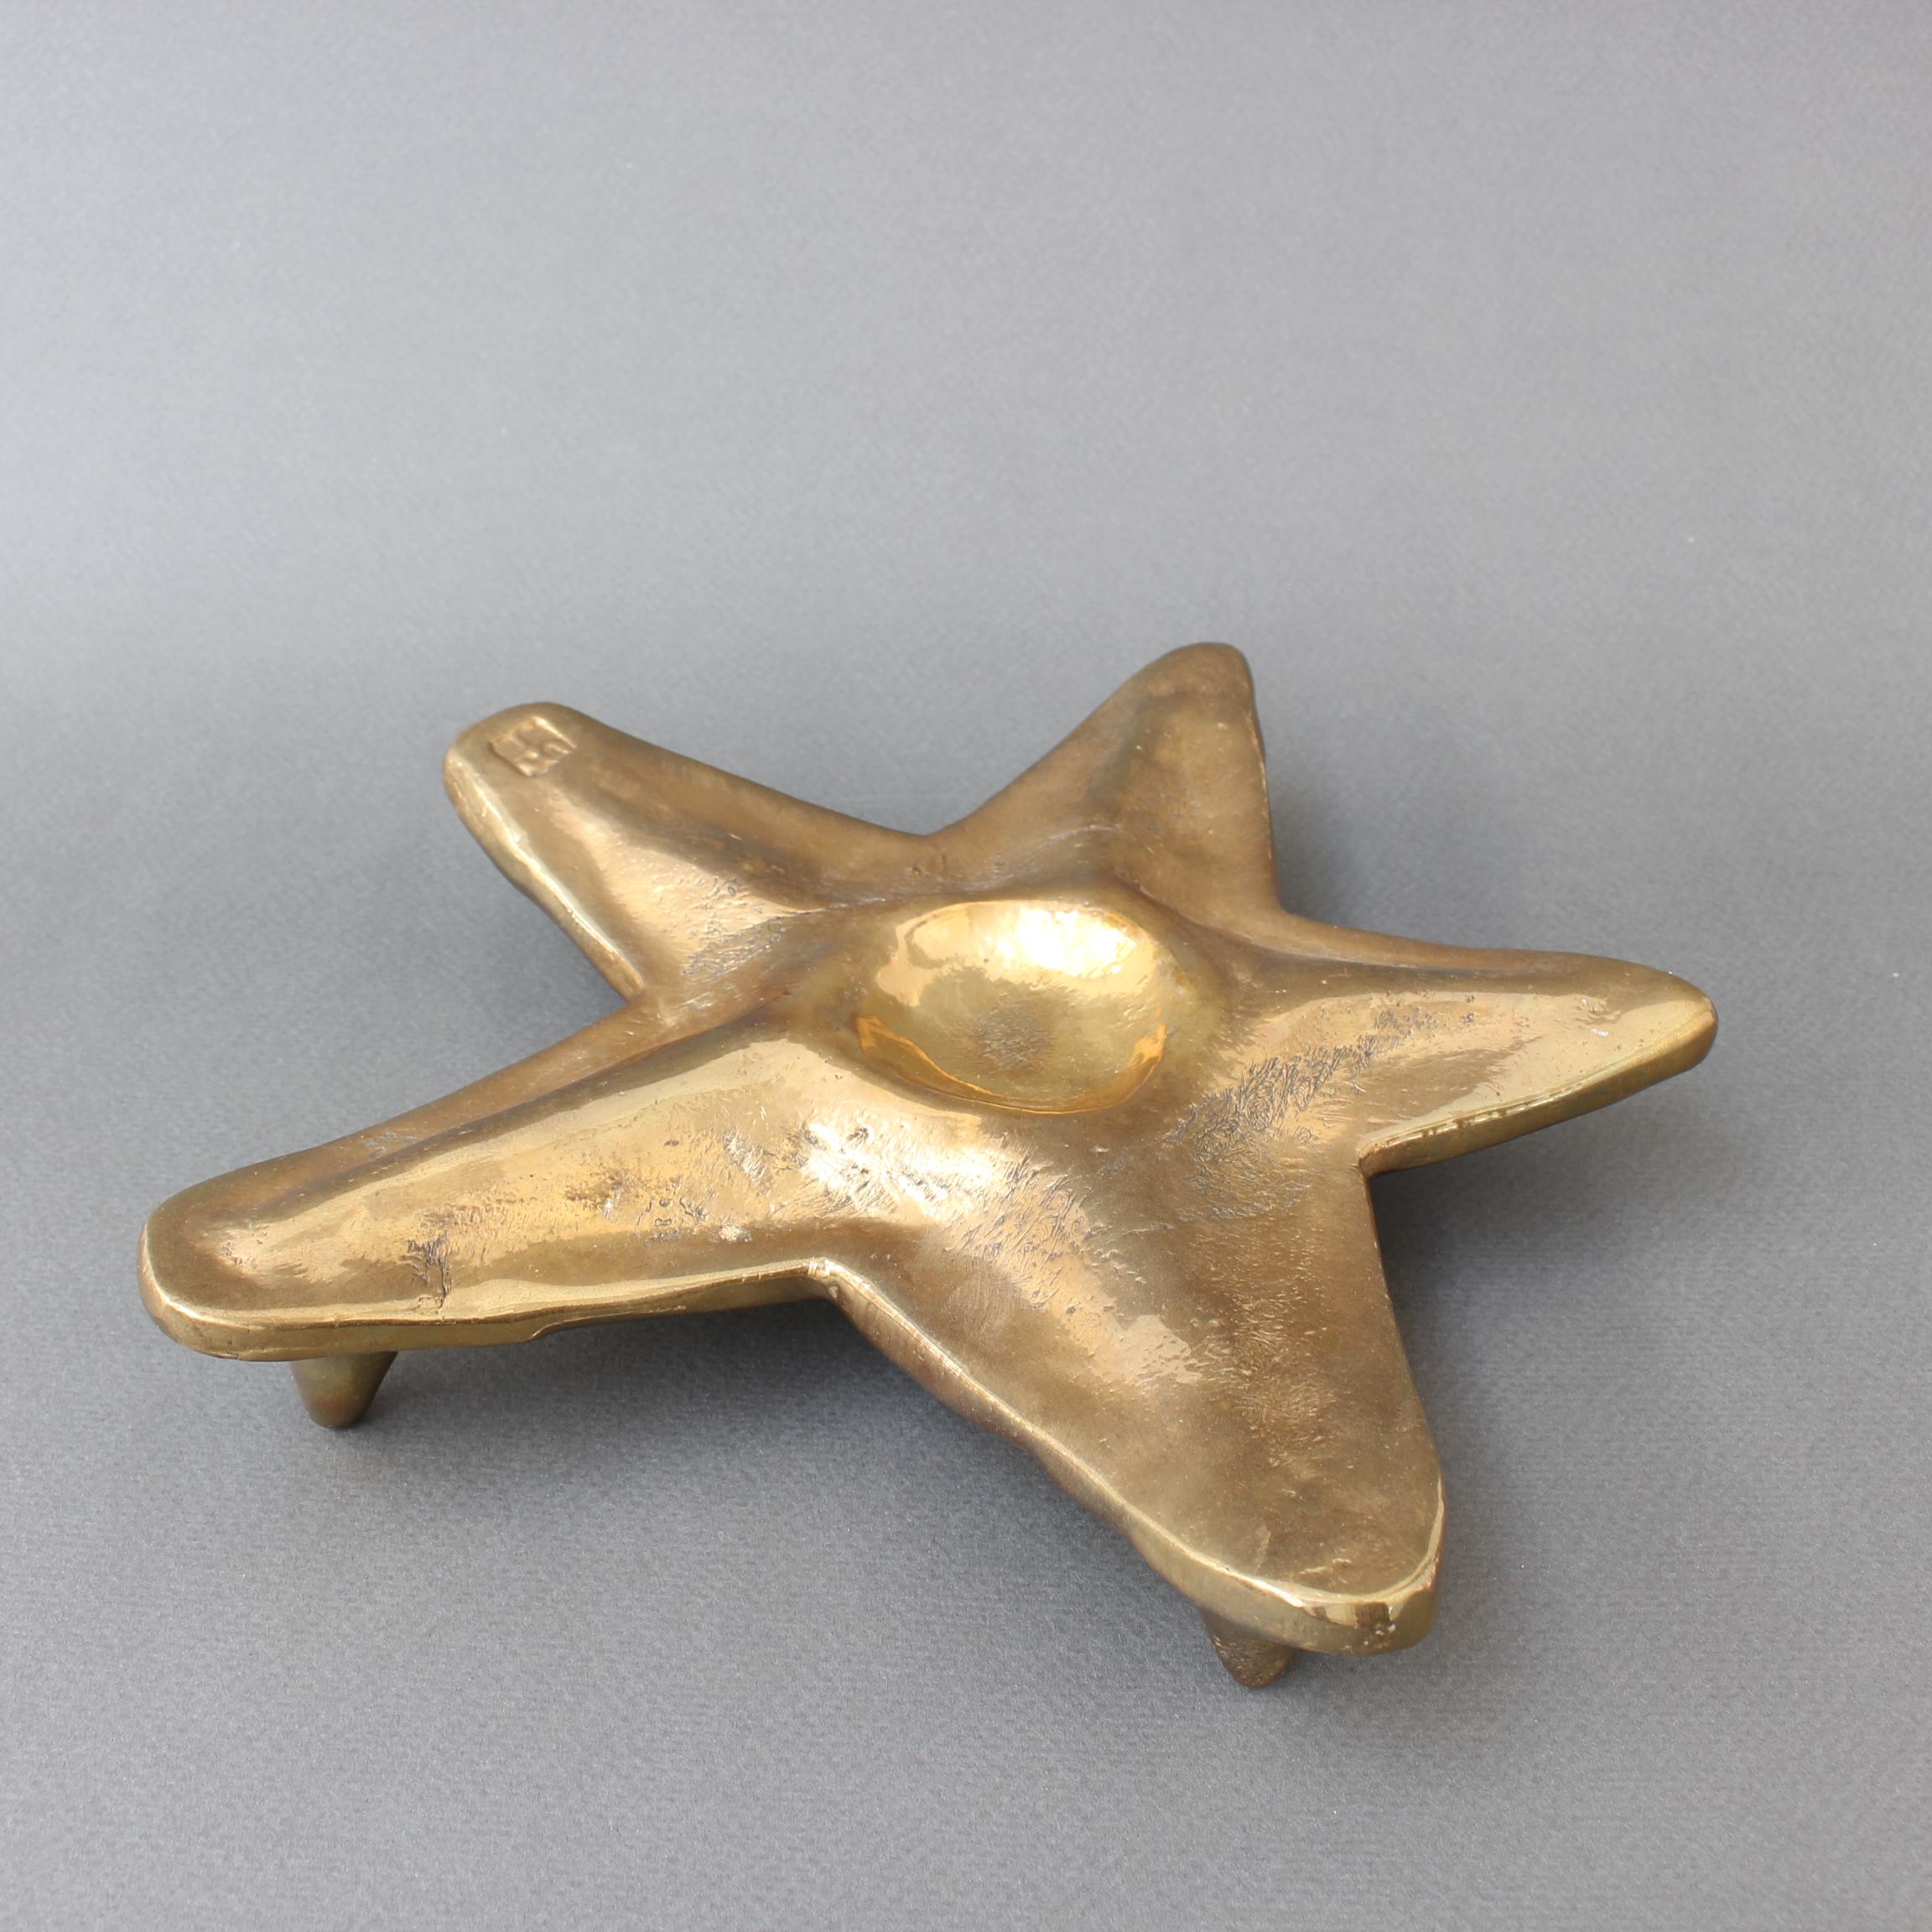 Decorative Brass Trivet in Starfish Motif by David Marshall 'circa 1990s' For Sale 4